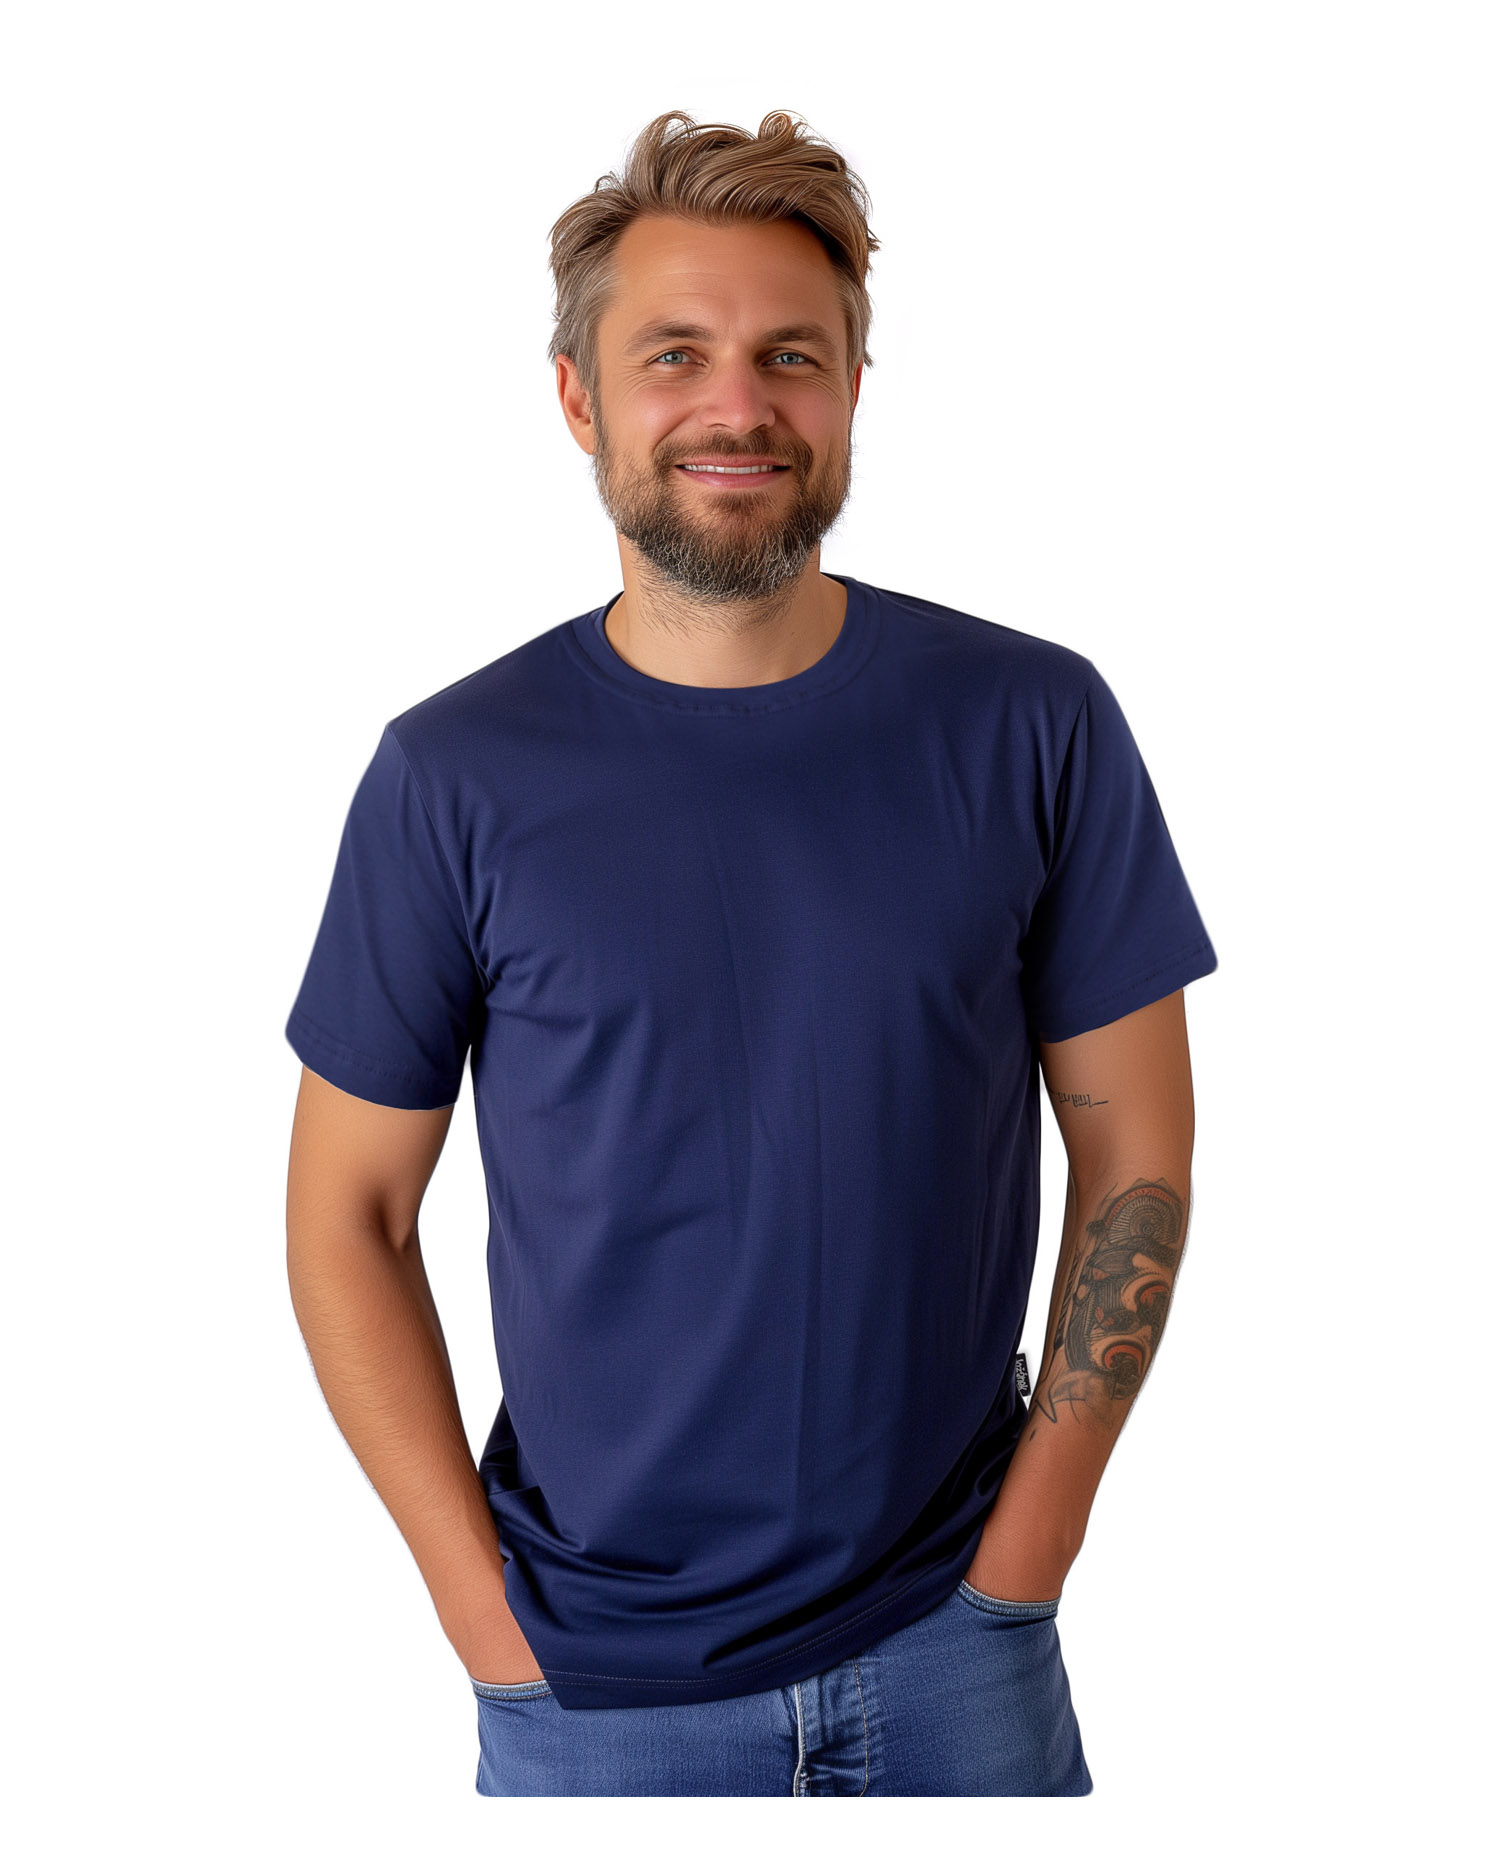 Men’s T-shirt Marek, short sleeve, jeans